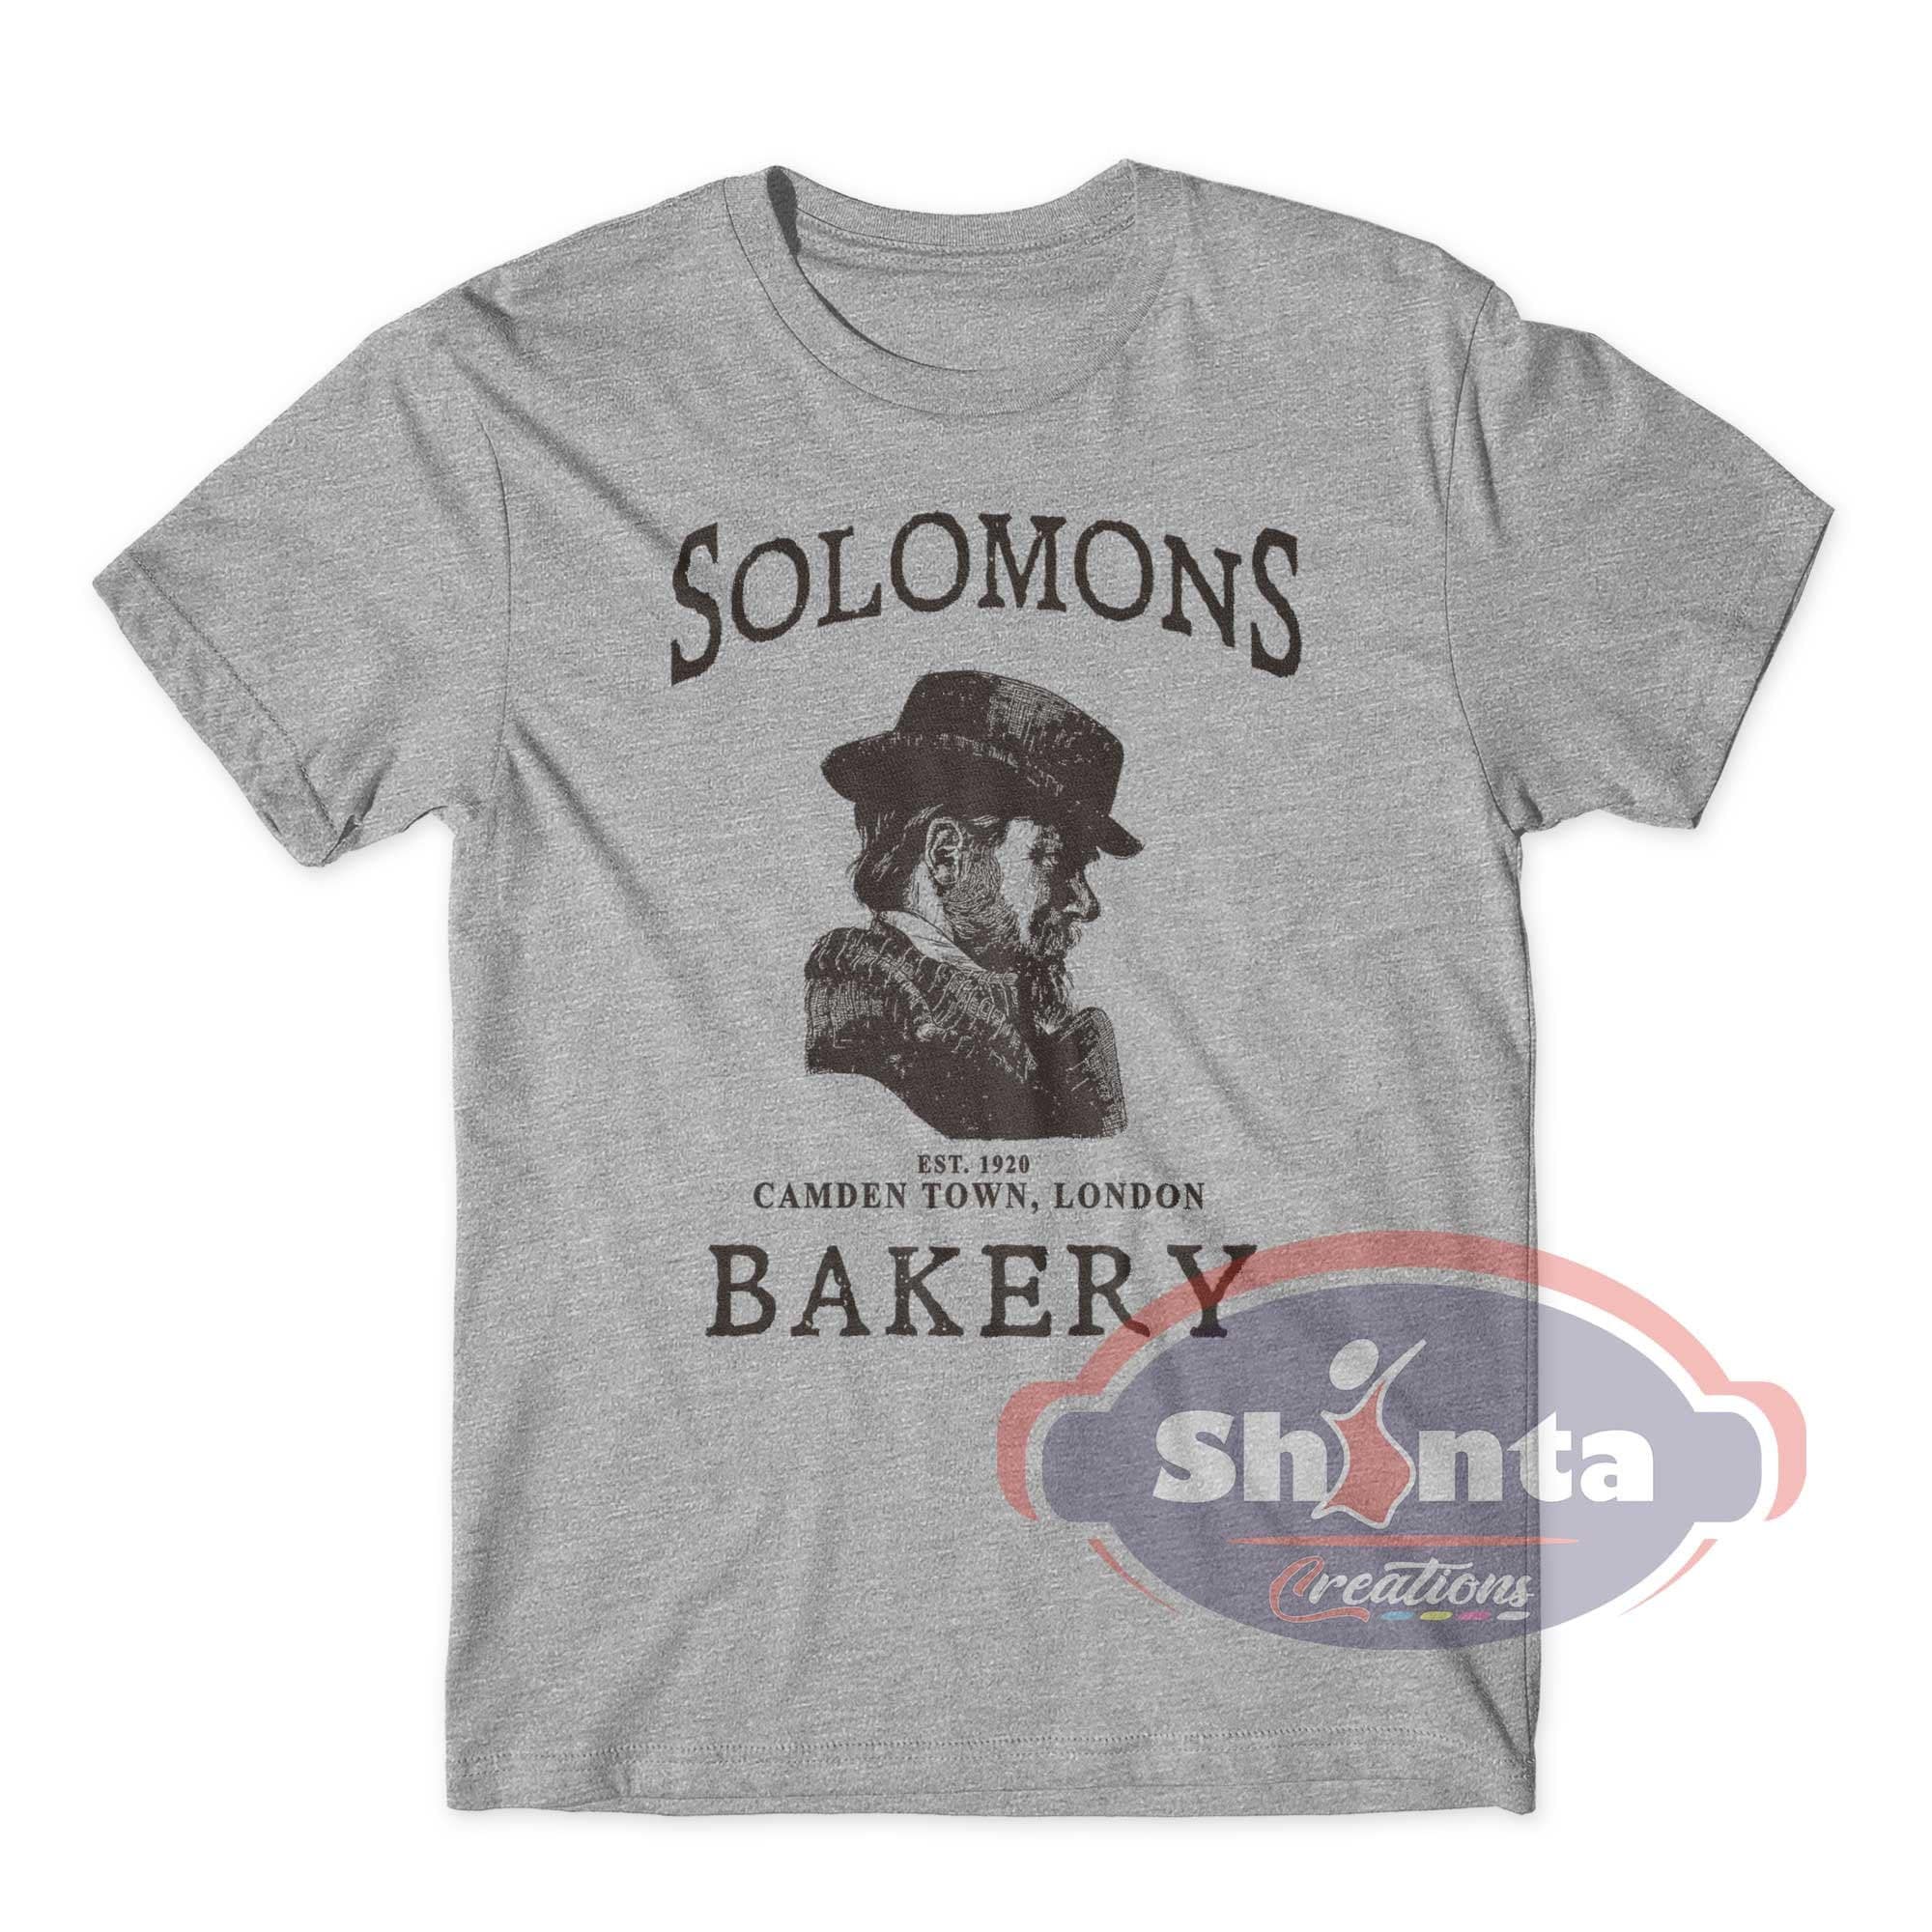 Solomons Bakery Sweatshirt Alfie Solomons shirt Funny Alfie Solomons Rum Camden Town London Peaky Blinders Sweatshirt Unisex Sweater Tee 3b